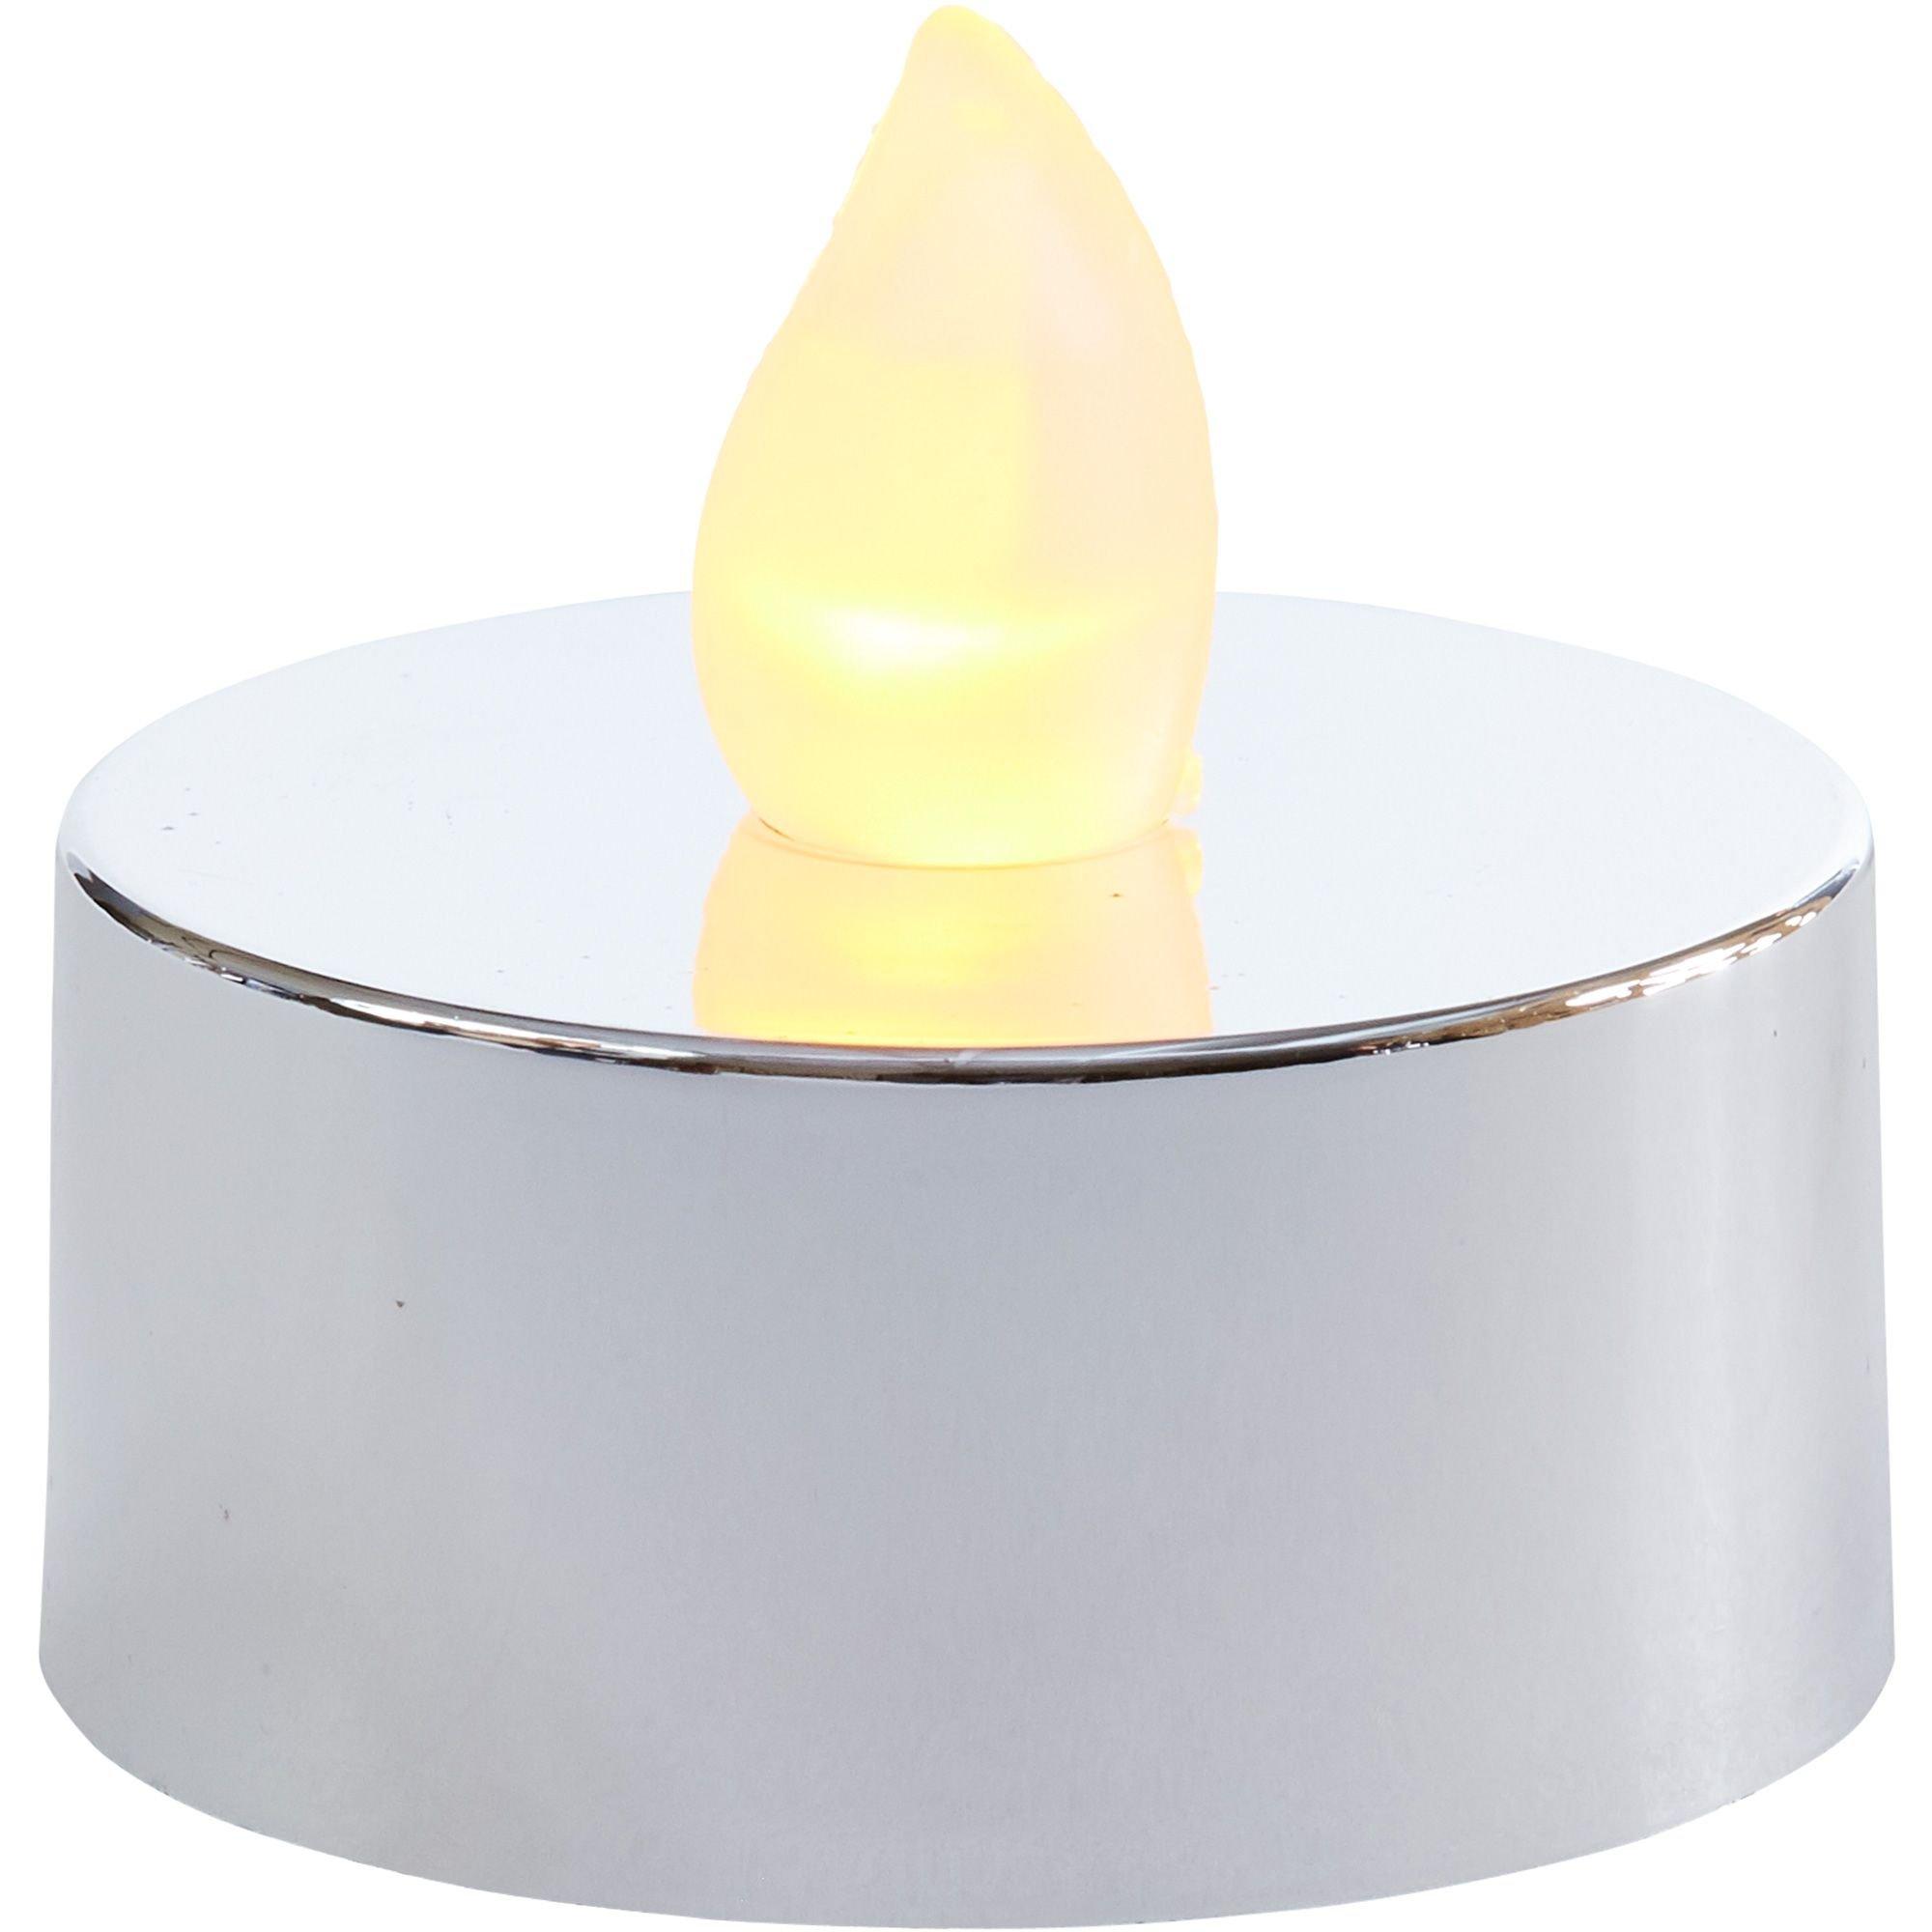 Metallic Silver Tealight Flameless LED Candles 18ct